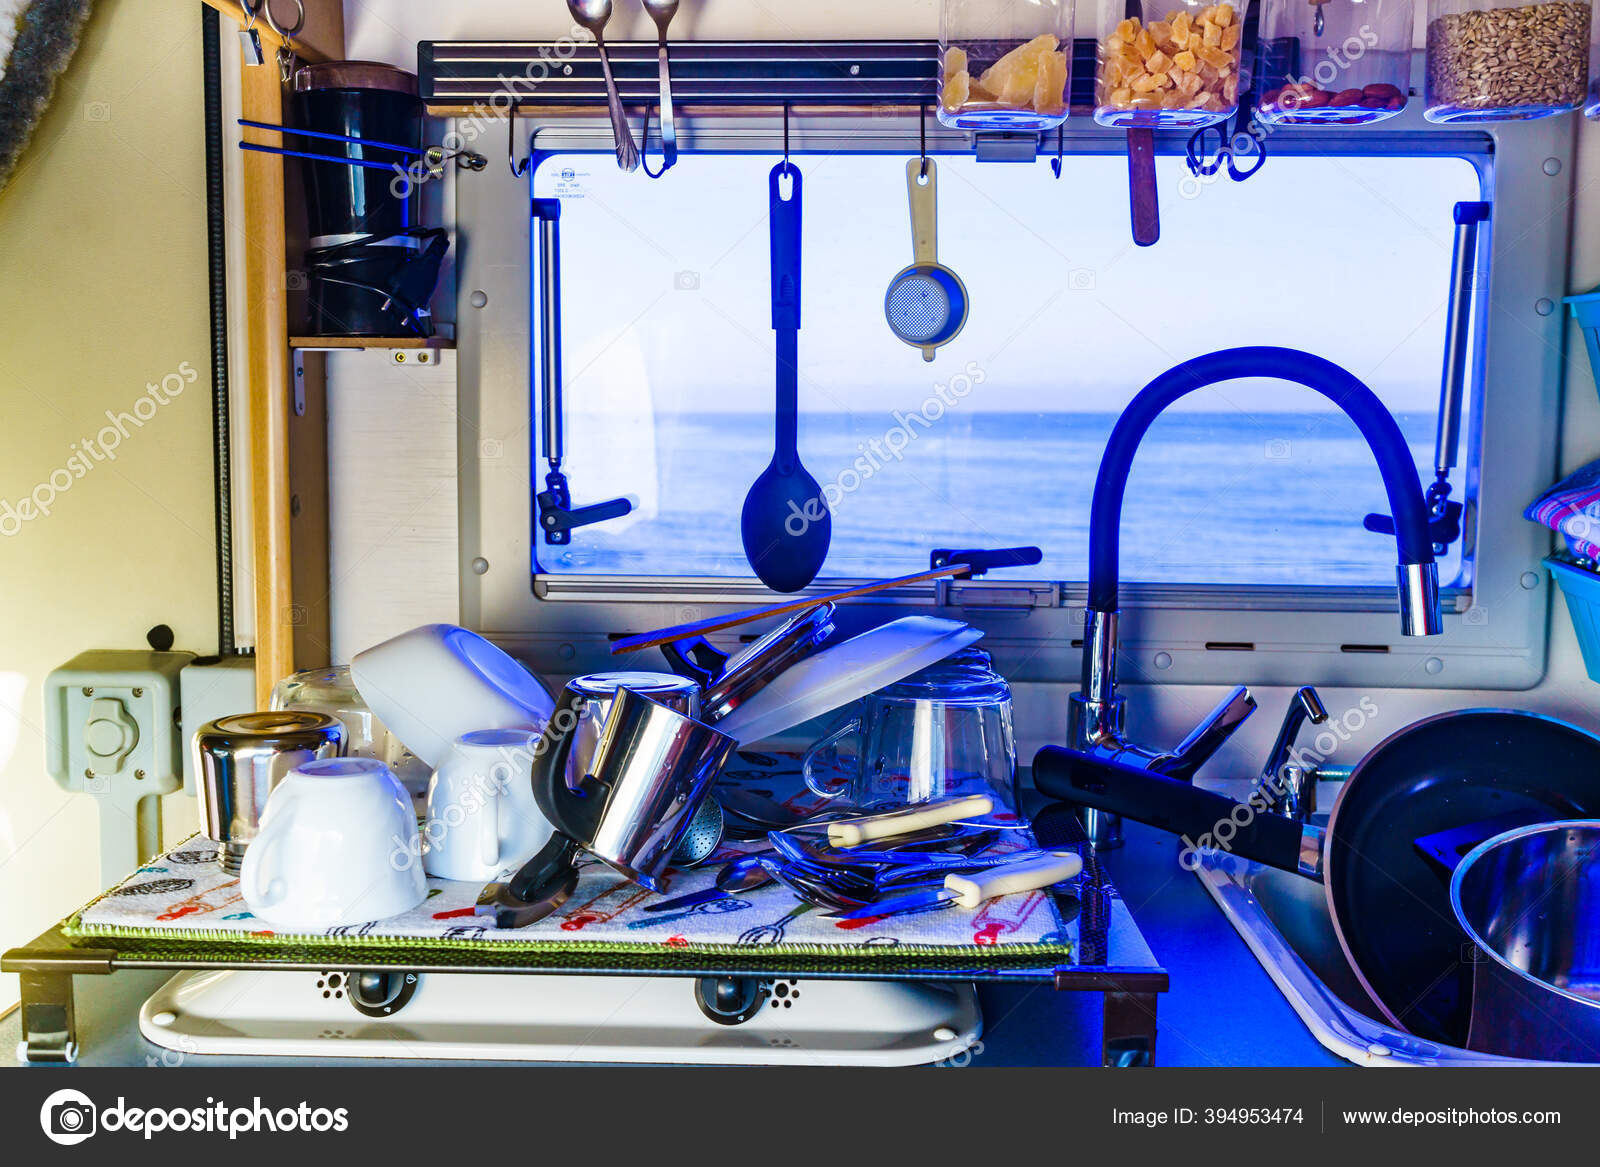 https://st4.depositphotos.com/1735158/39495/i/1600/depositphotos_394953474-stock-photo-caravan-dishwashing-kitchen-many-clean.jpg